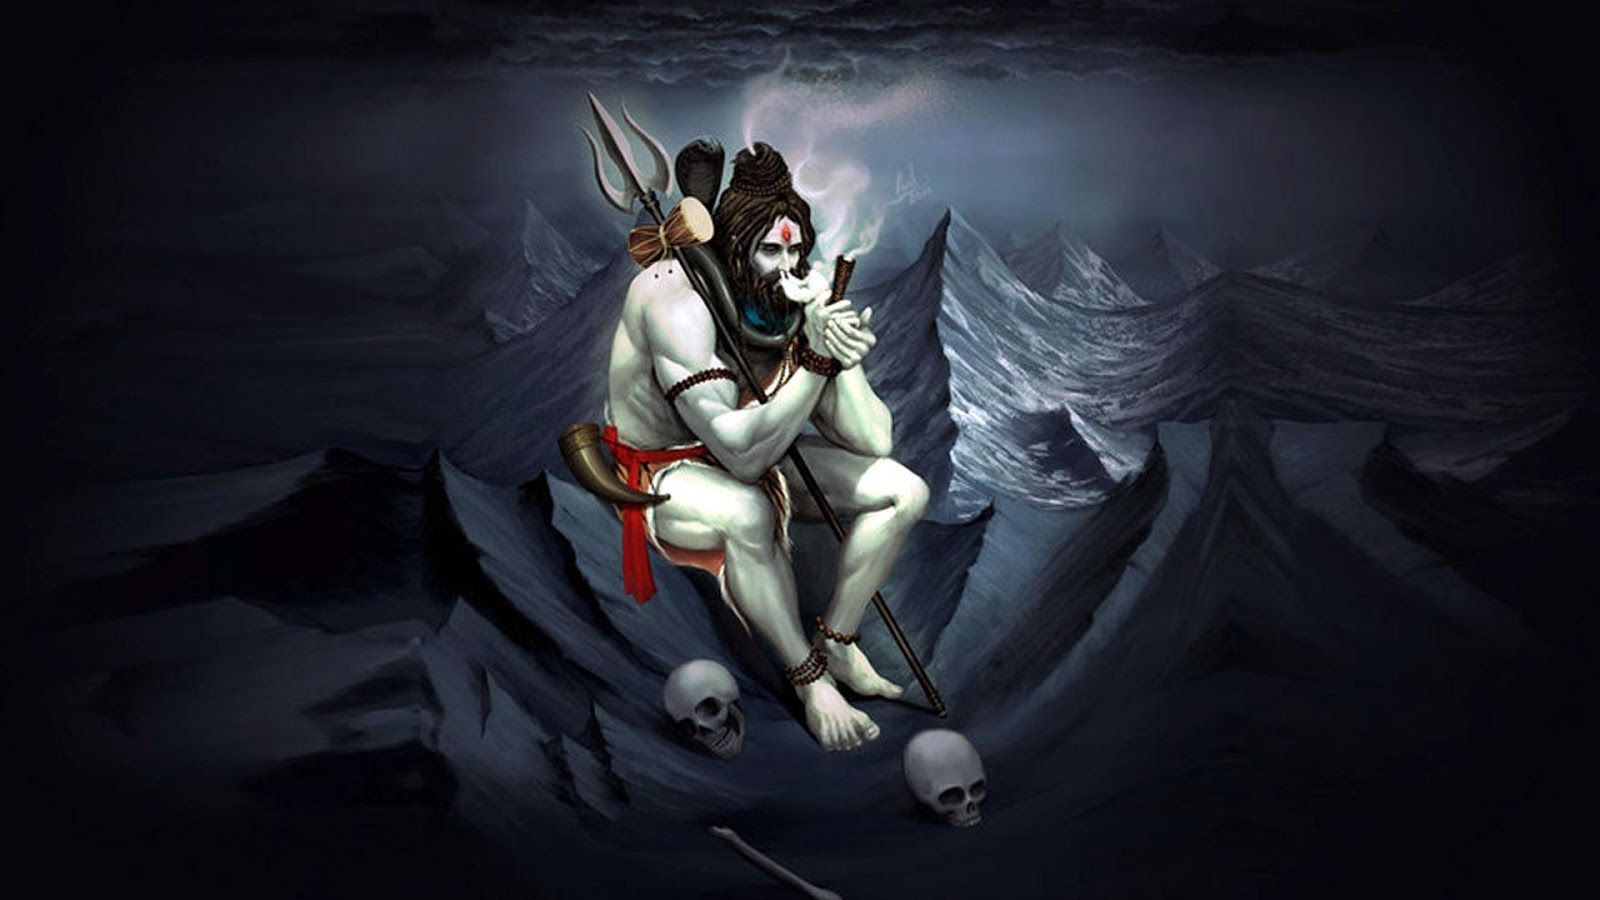 HD Lord Shiva - Mahakal Wallpaper Download | MobCup